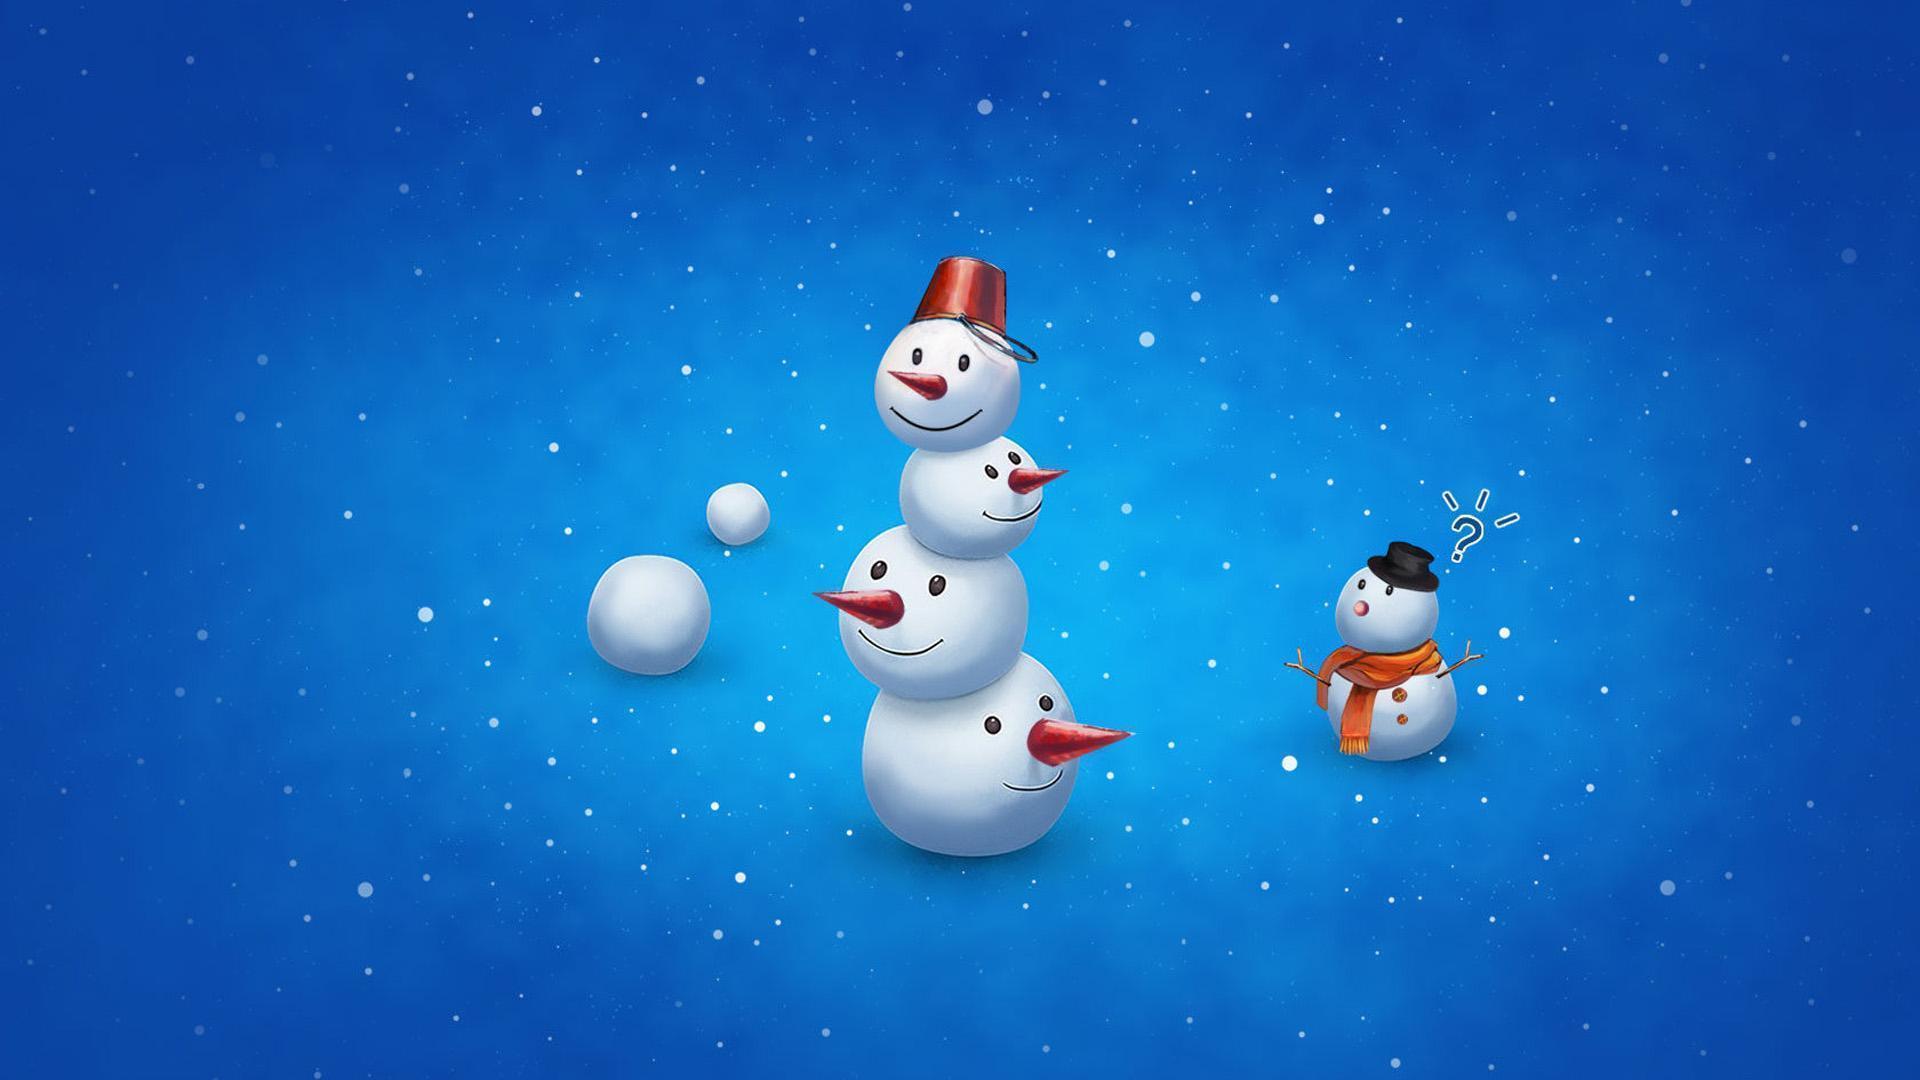 1080P Little cute snowman wallpaper image 1920x1080 1080p HD